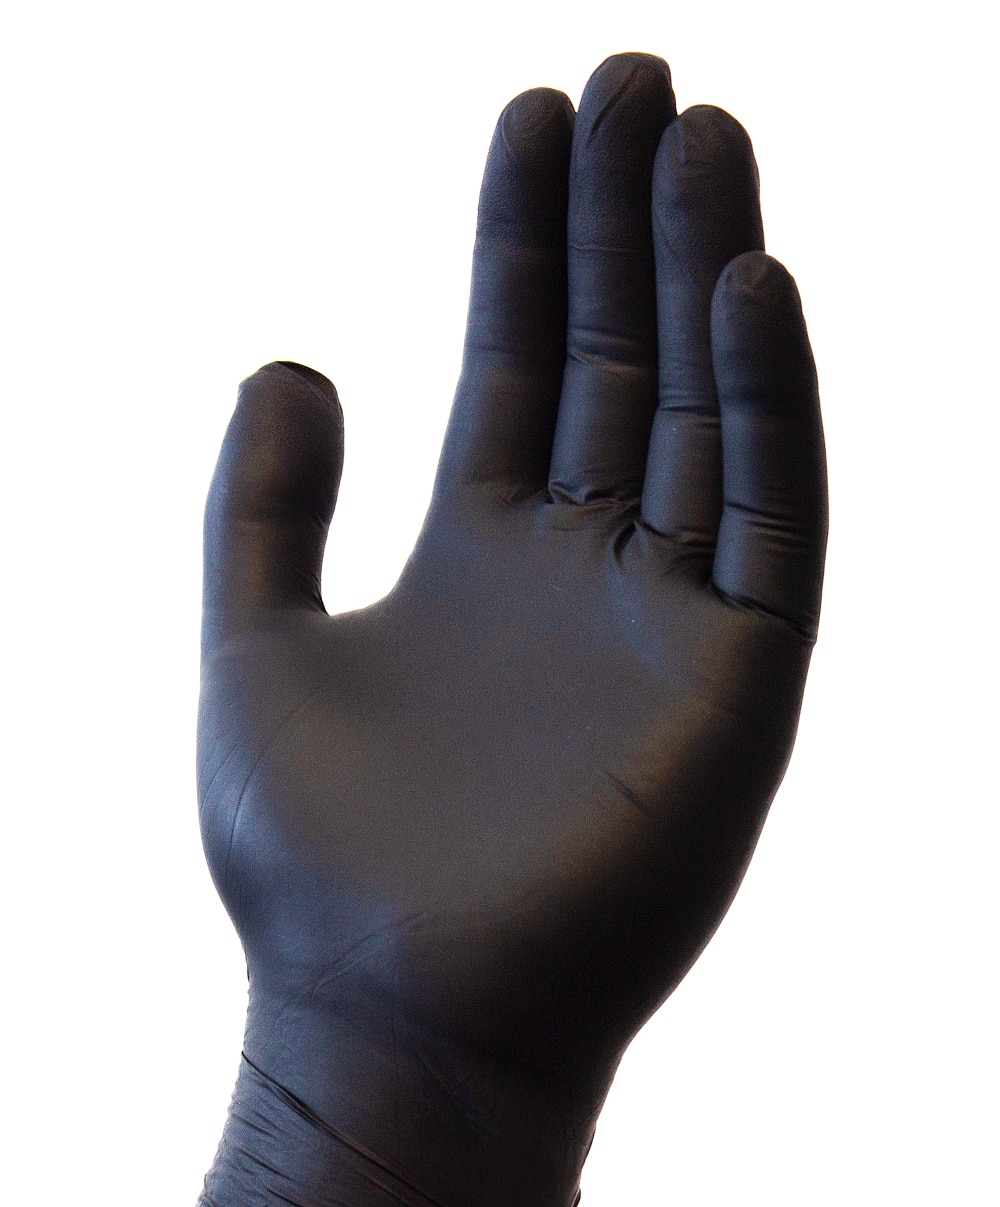 GNEP-LG-K N4433 4.3Mil Nitrile 
Medical Grade Powder Free 
Black Glove 100/Bx 10Bx/Cs